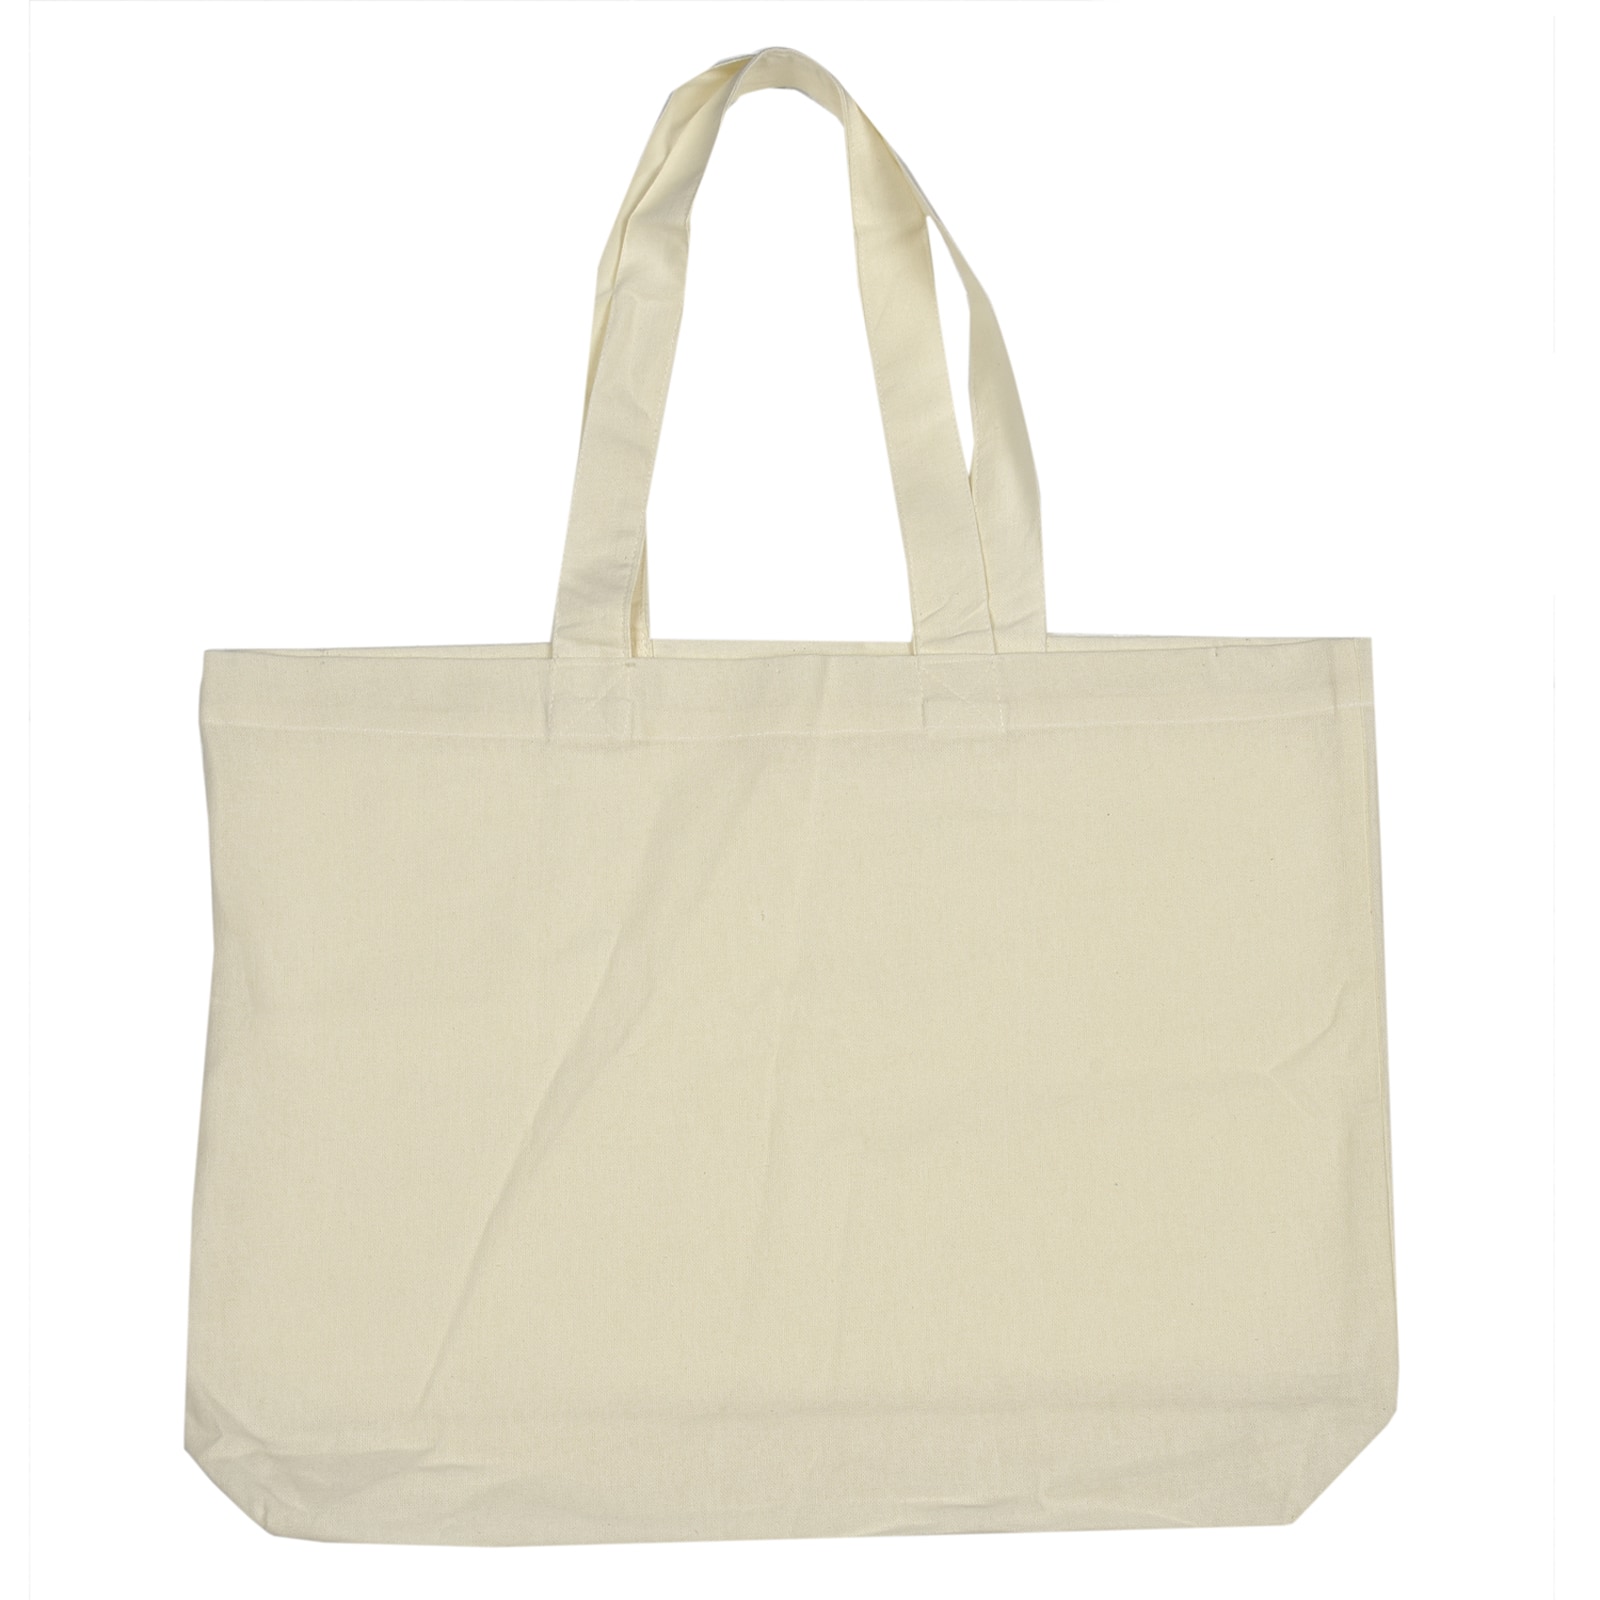  6 Pack Blank Bulk Canvas Tote Bags Natural Reusable Cloth  Fabric Plain Bags Decorating, Heat Press, Printing, DIY : Home & Kitchen